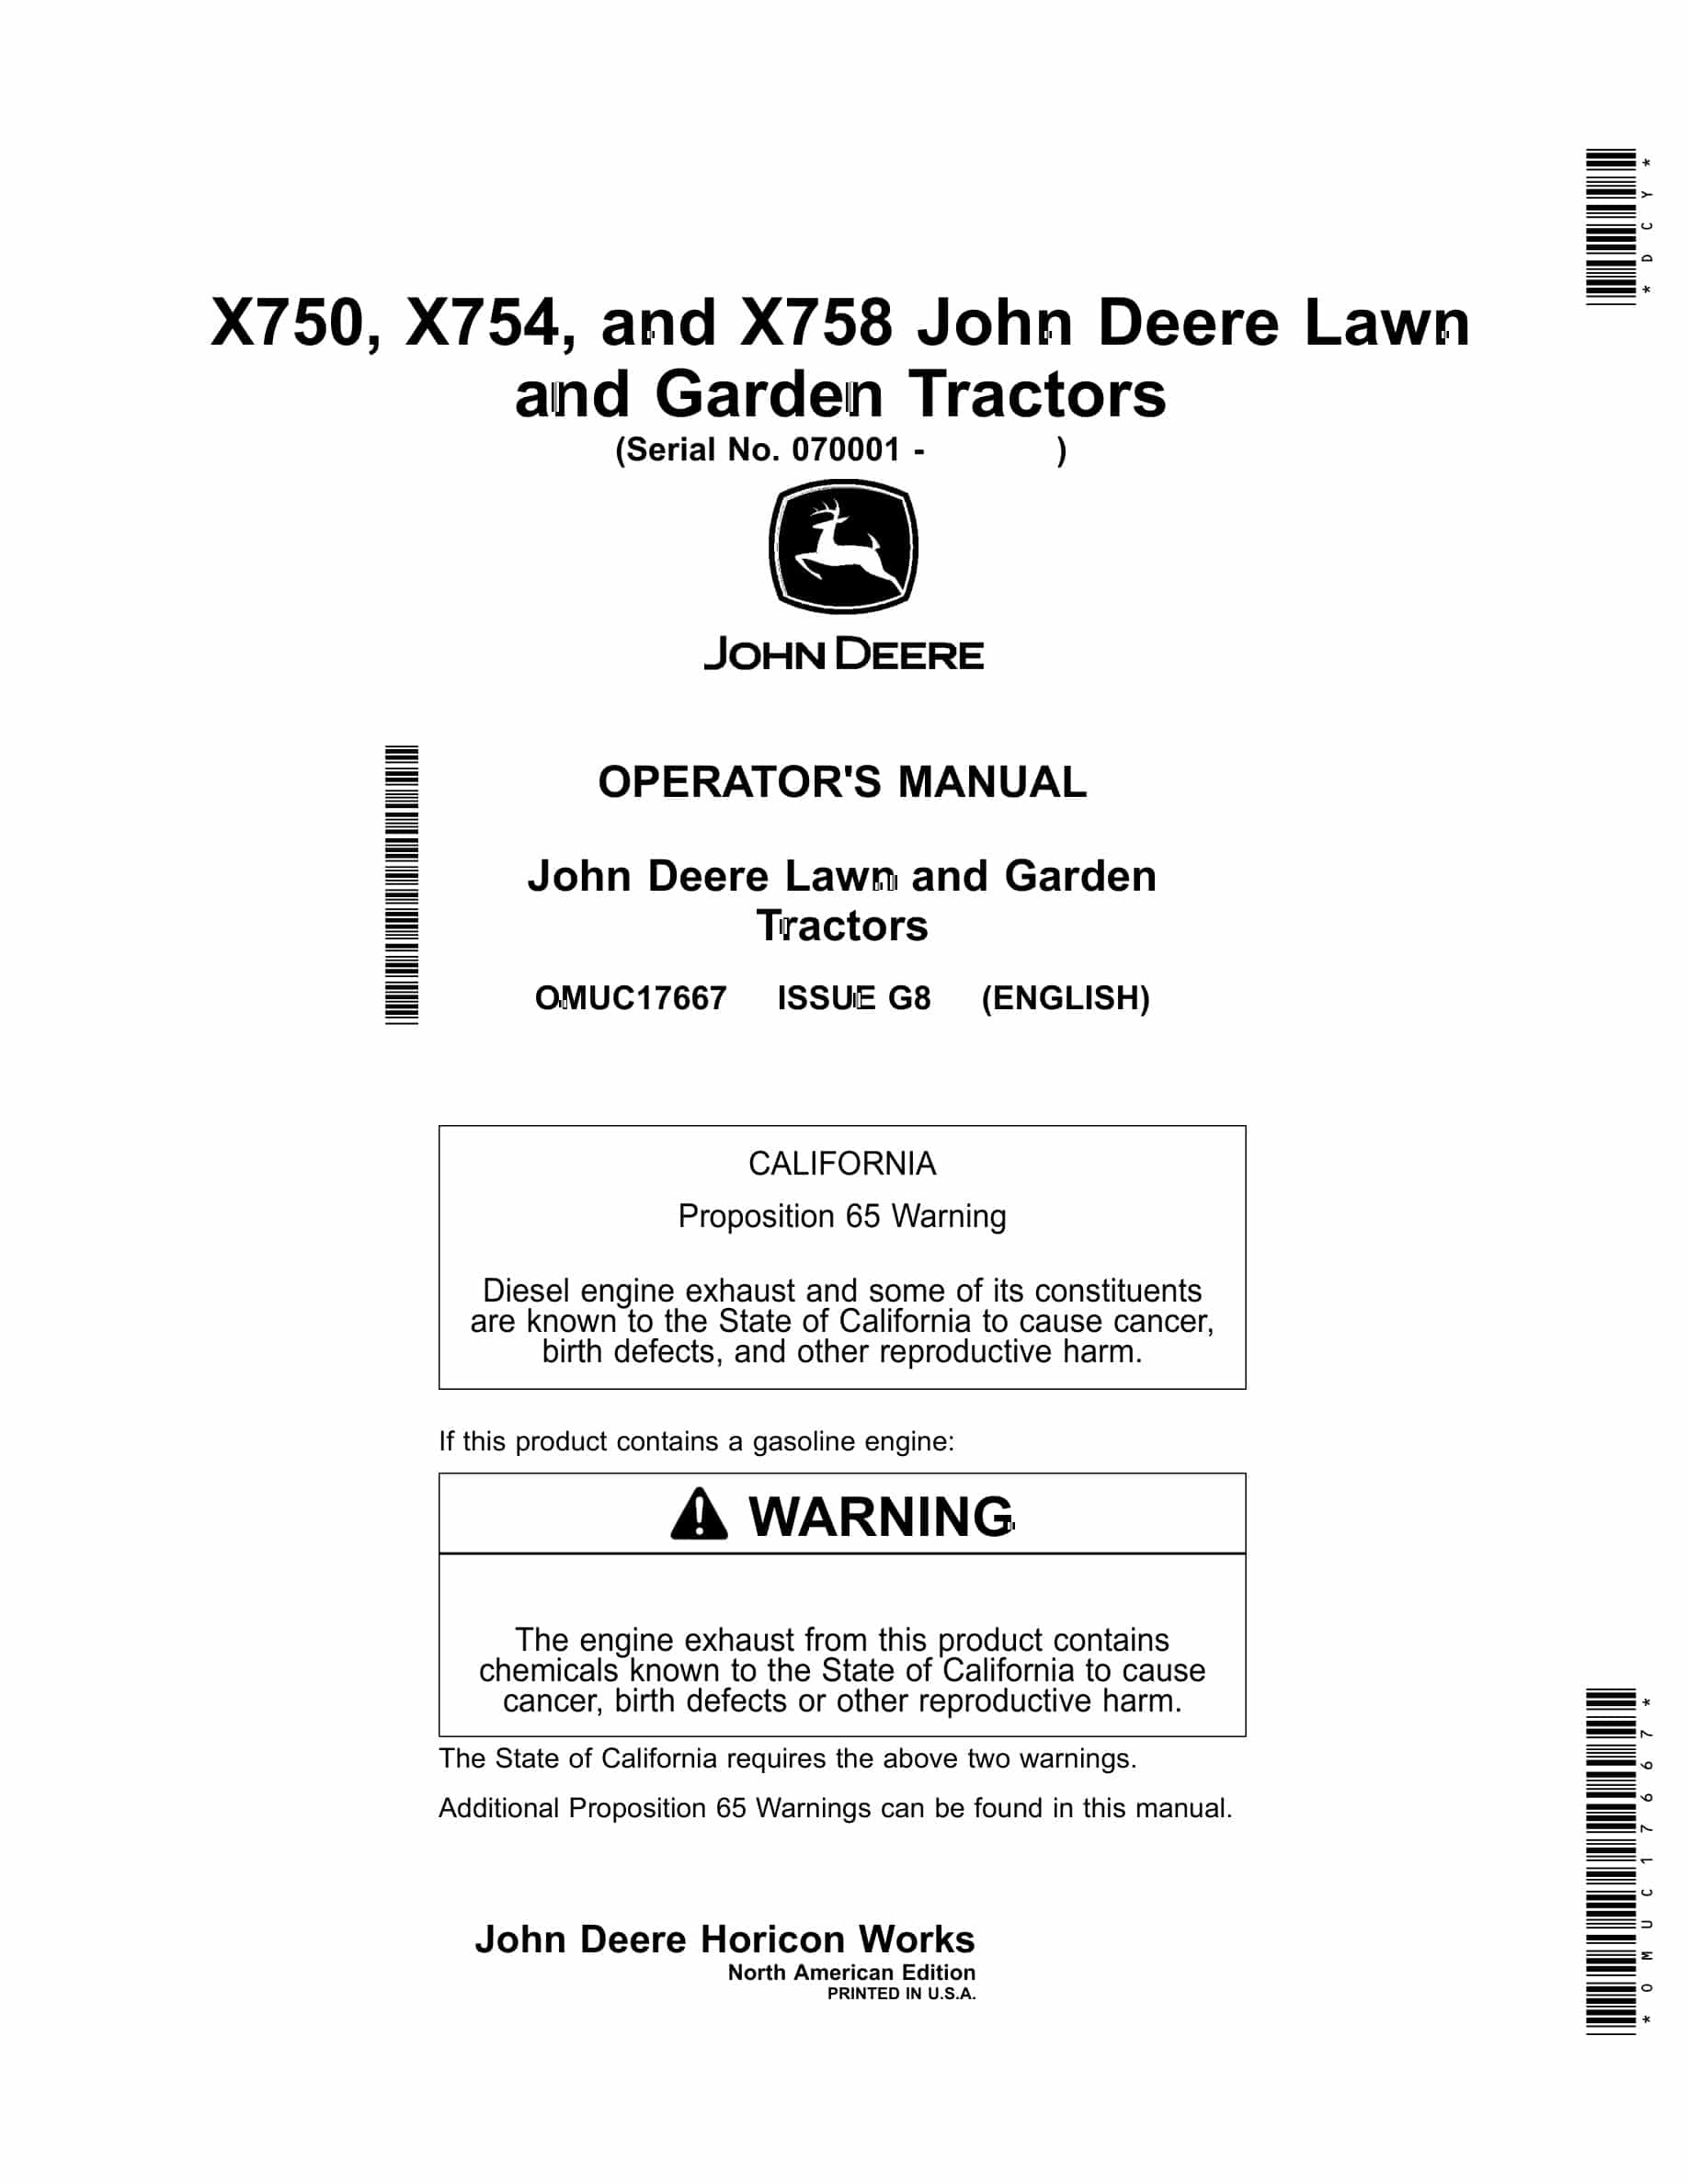 John Deere X750, X754, And X758 Lawn And Garden Tractors Operator Manuals OMUC17667-1